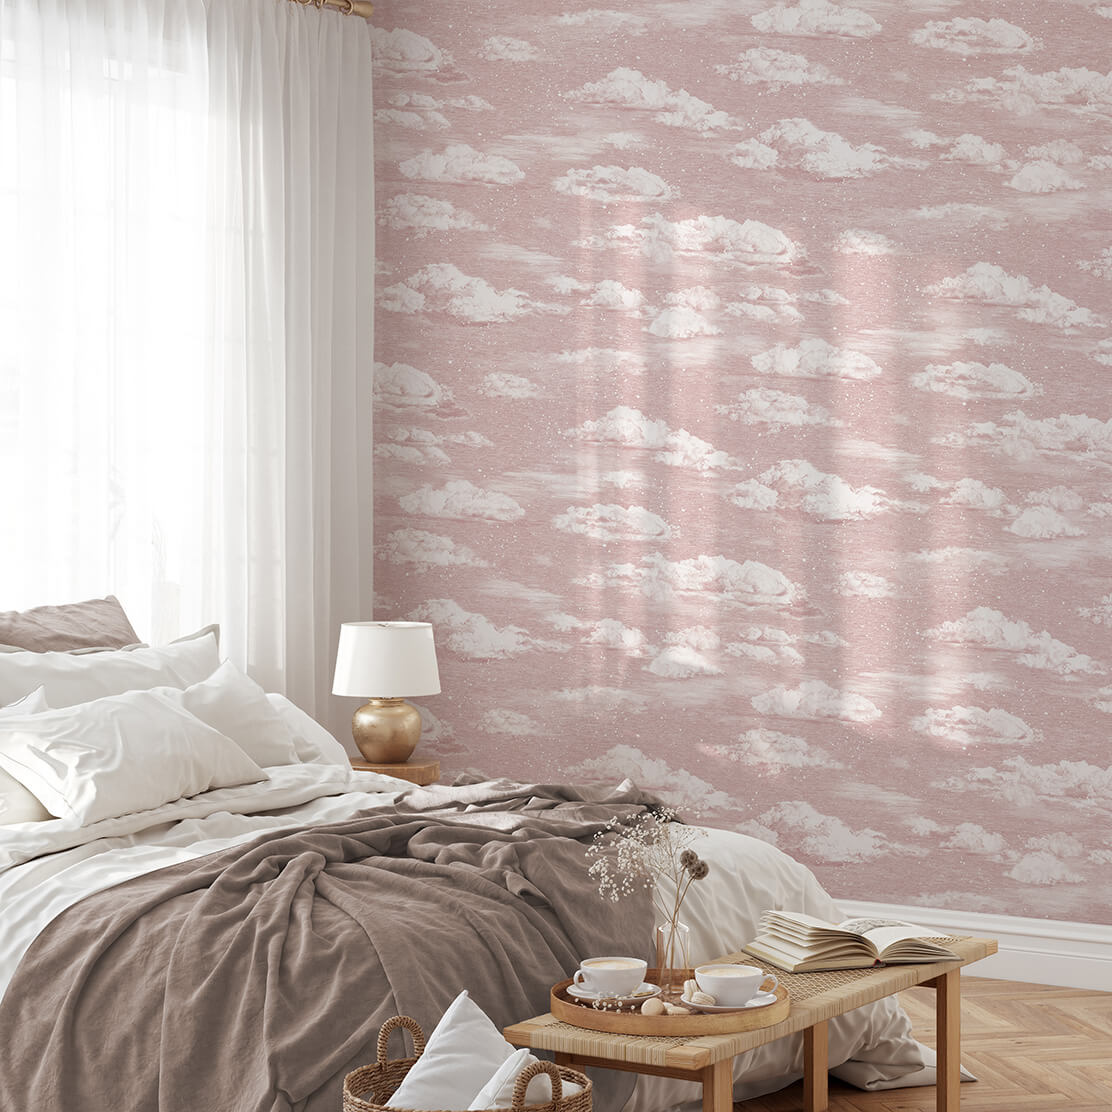 Pink clouds wallpaper in bohemian bedroom